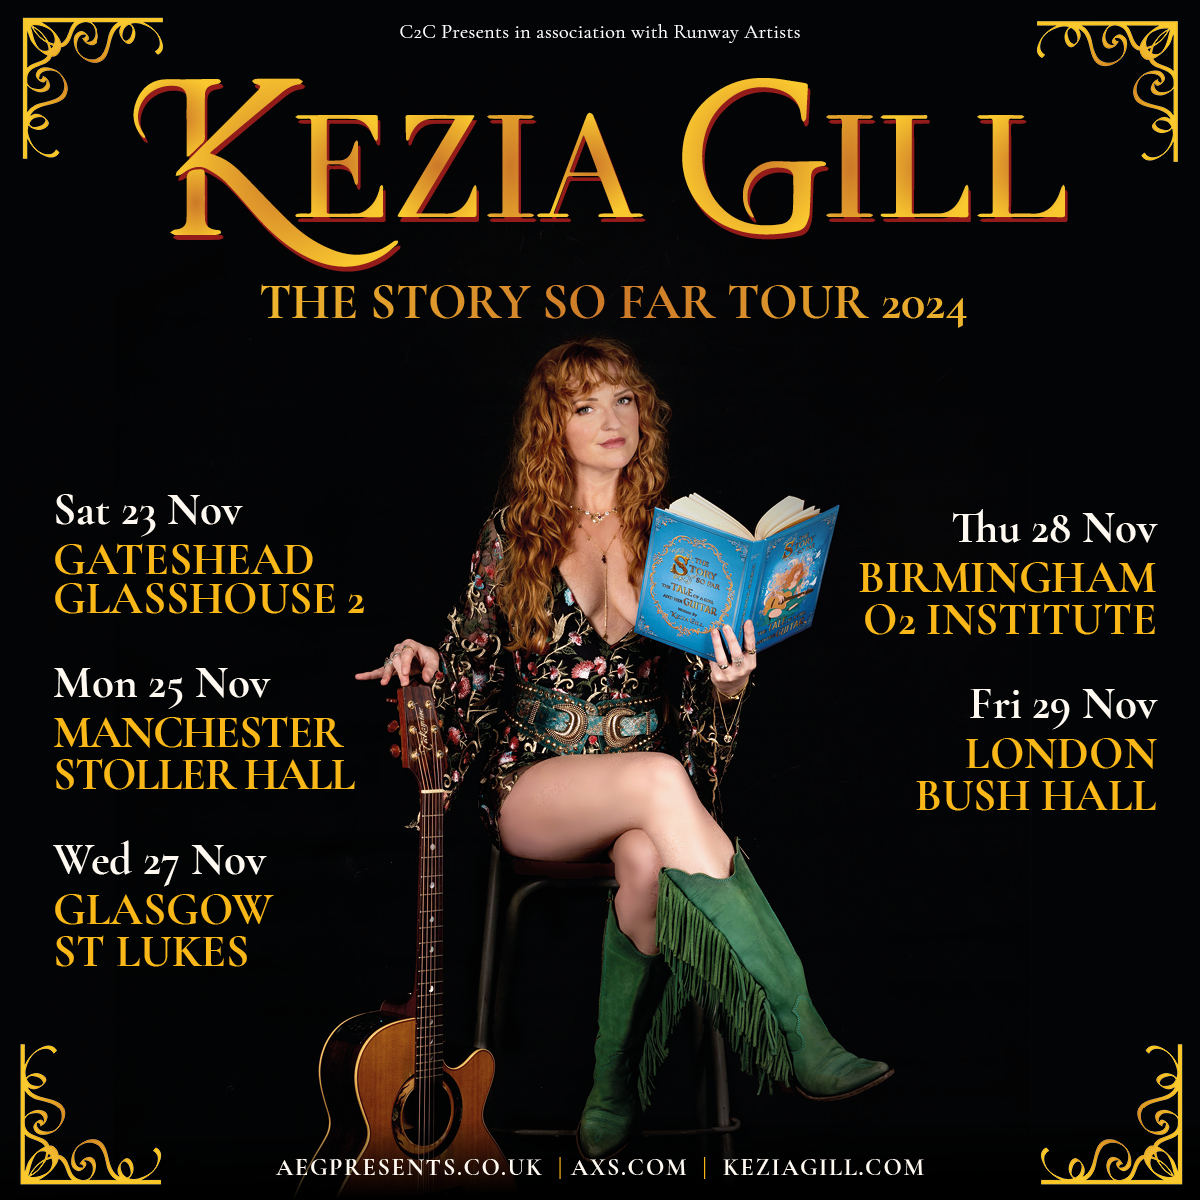 JUST ANNOUNCED! @Keziagillmusic | The Story So Far Tour | Nov 2024 Tickets on sale 10am Thursday: aegp.uk/KeziaGill24